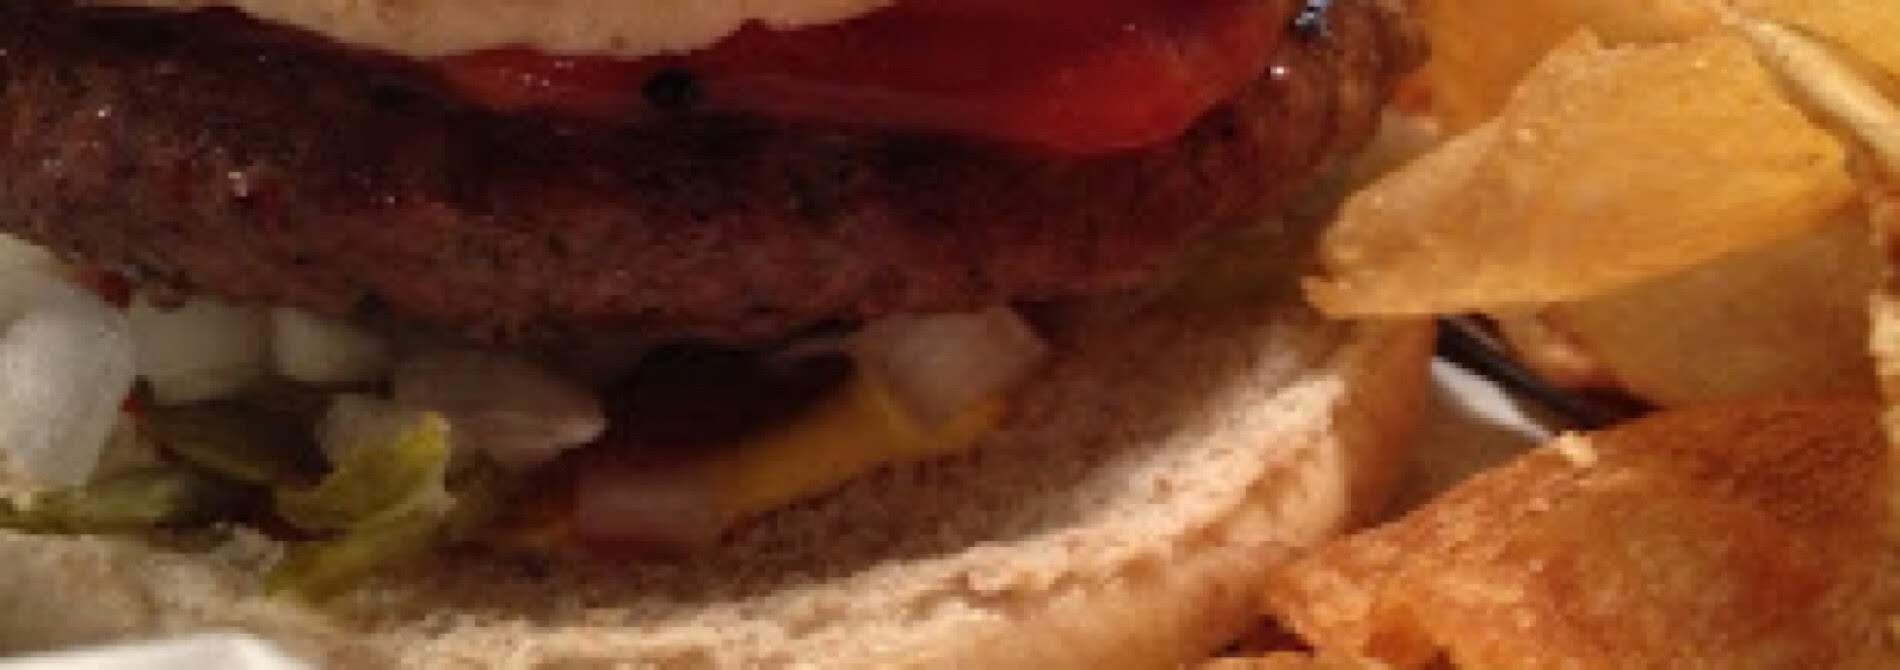 closeup of hamburger